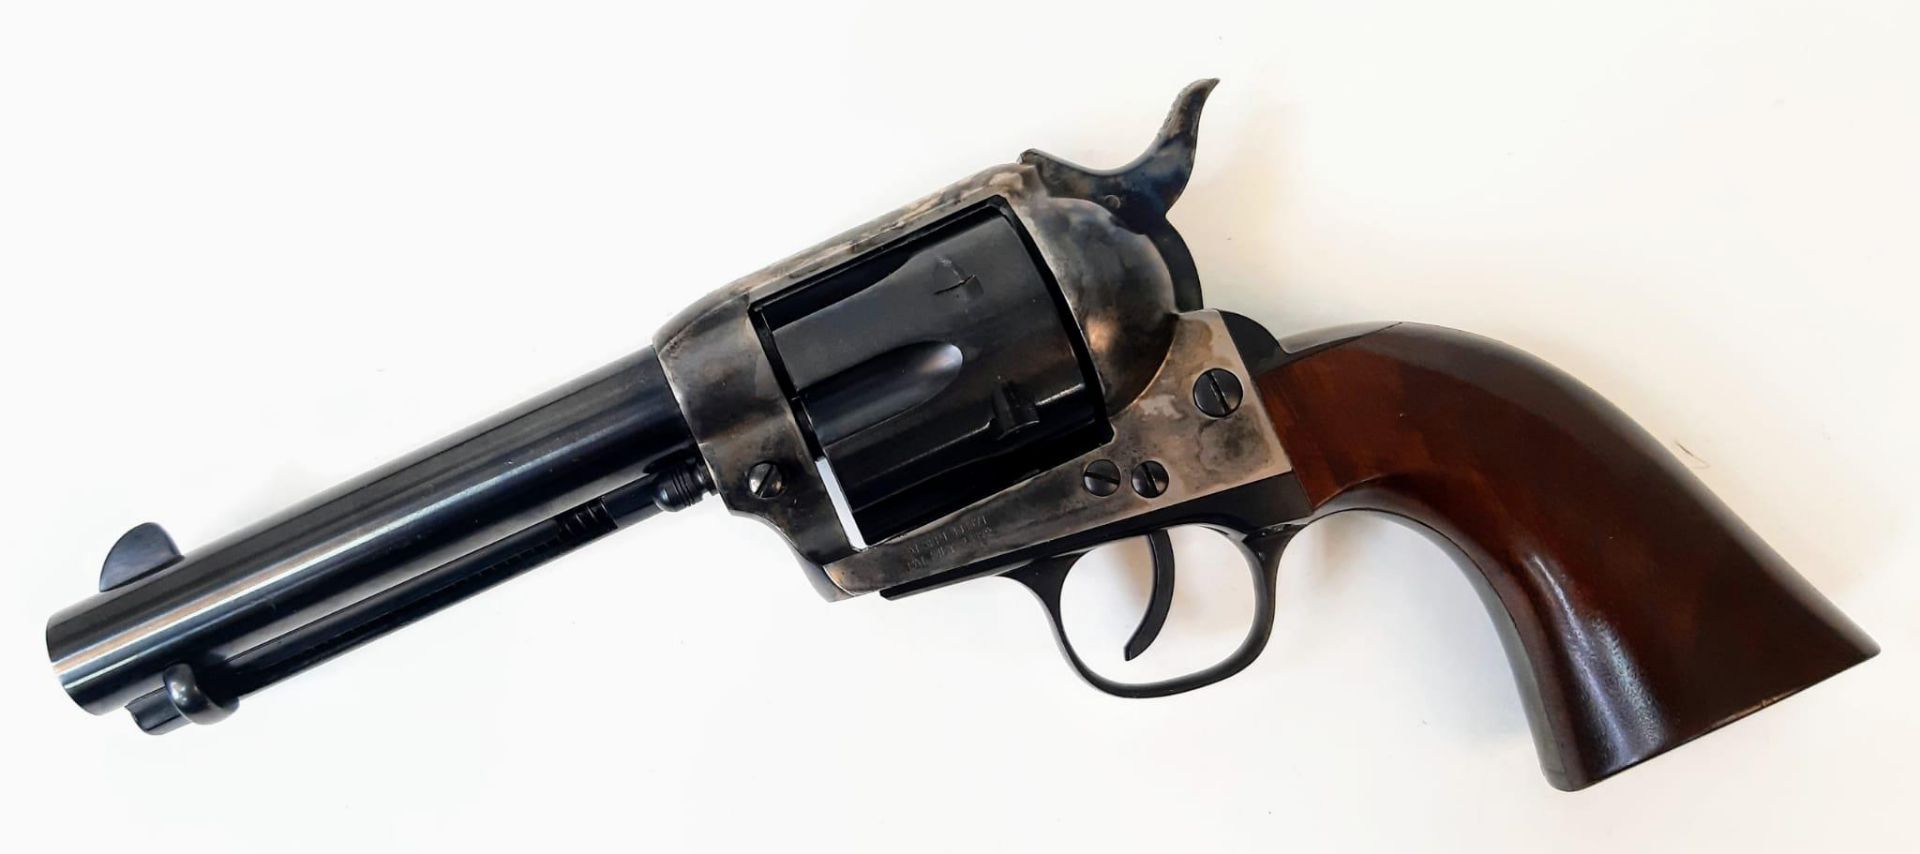 A Deactivated Uberti Reproduction Colt Peacemaker Gun. This Italian made .22 calibre revolver